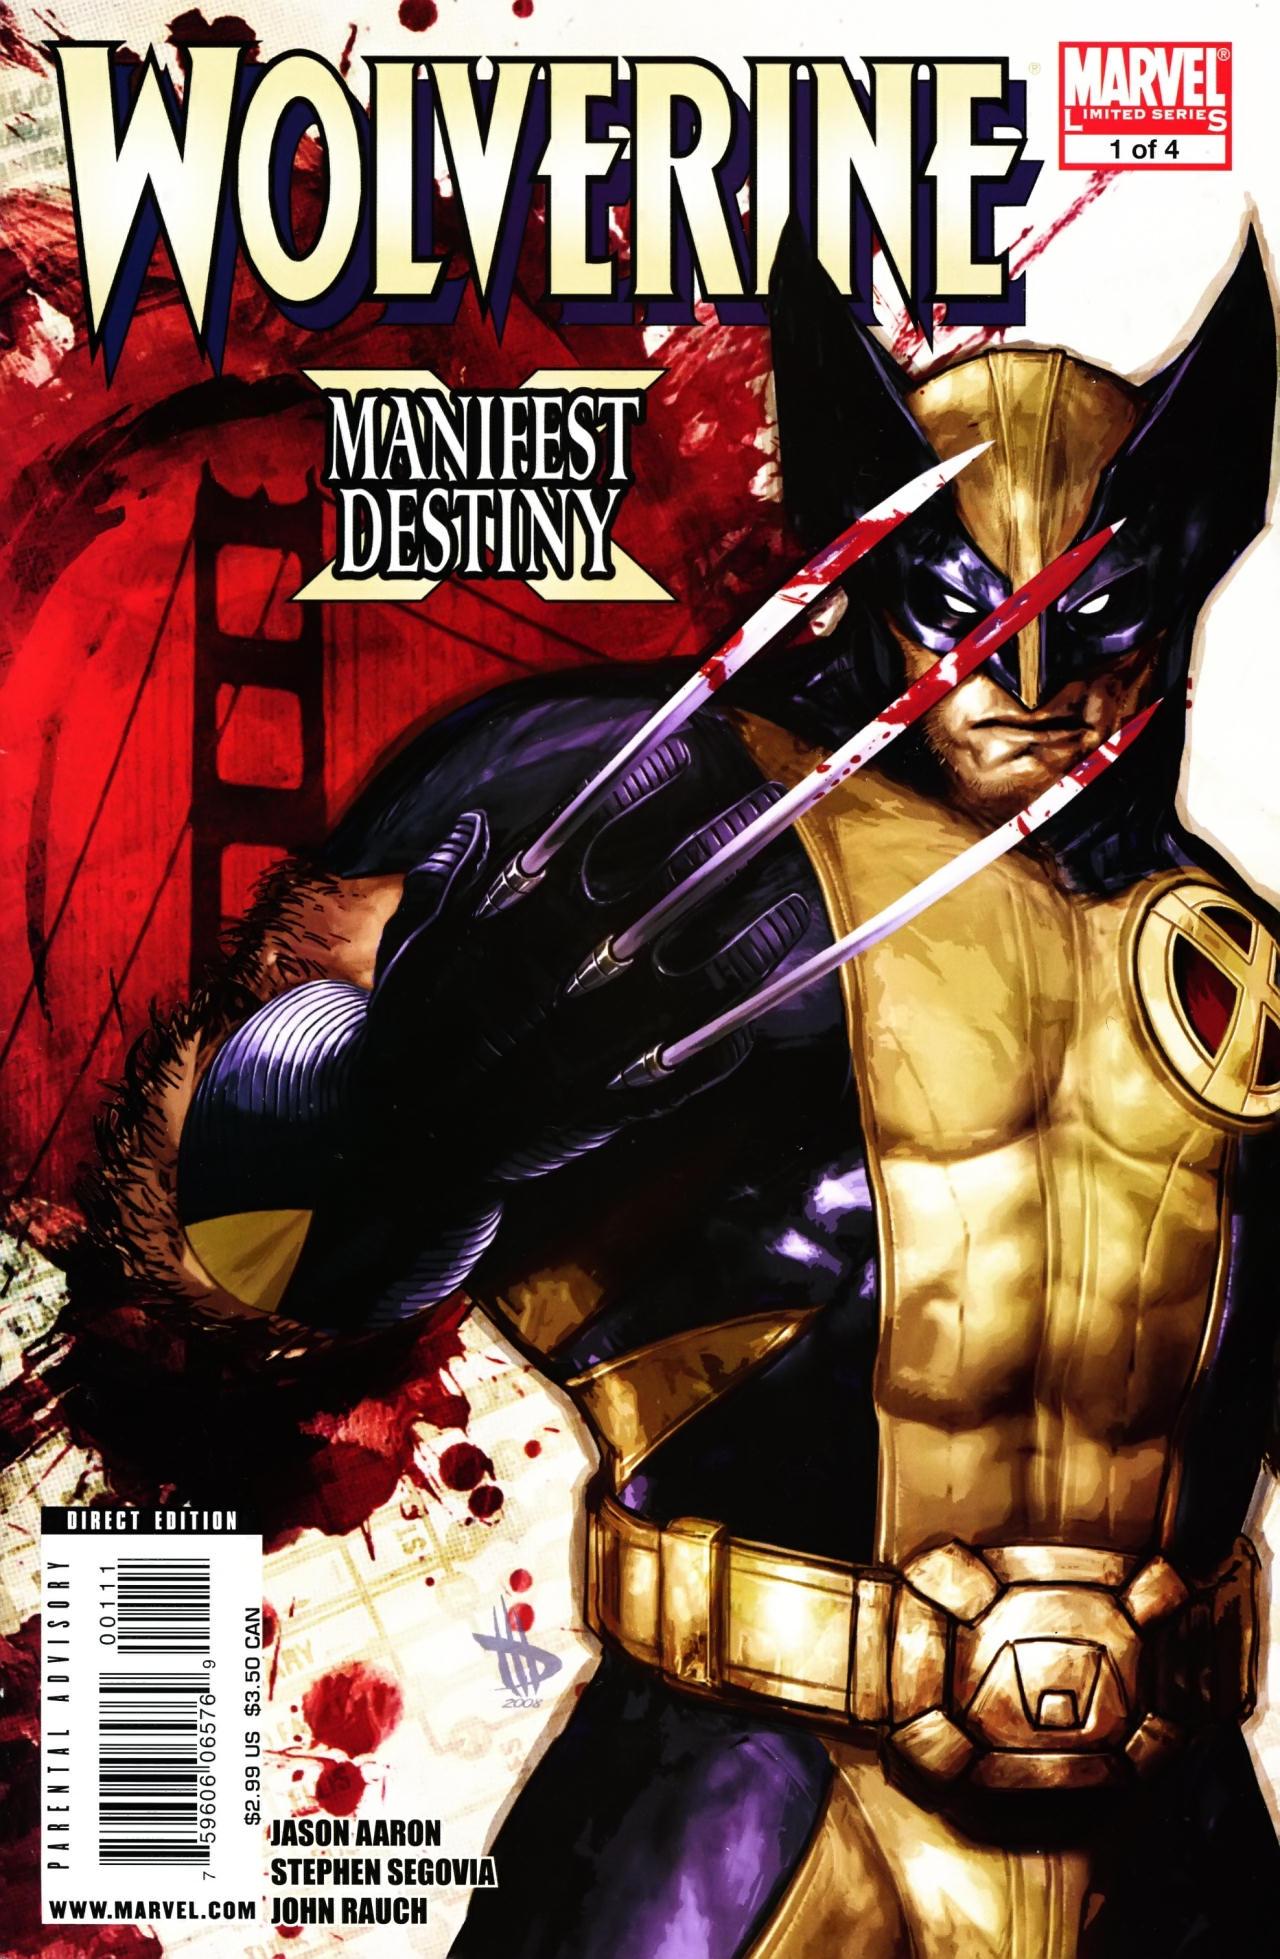 Wolverine: Manifest Destiny Vol. 1 #1